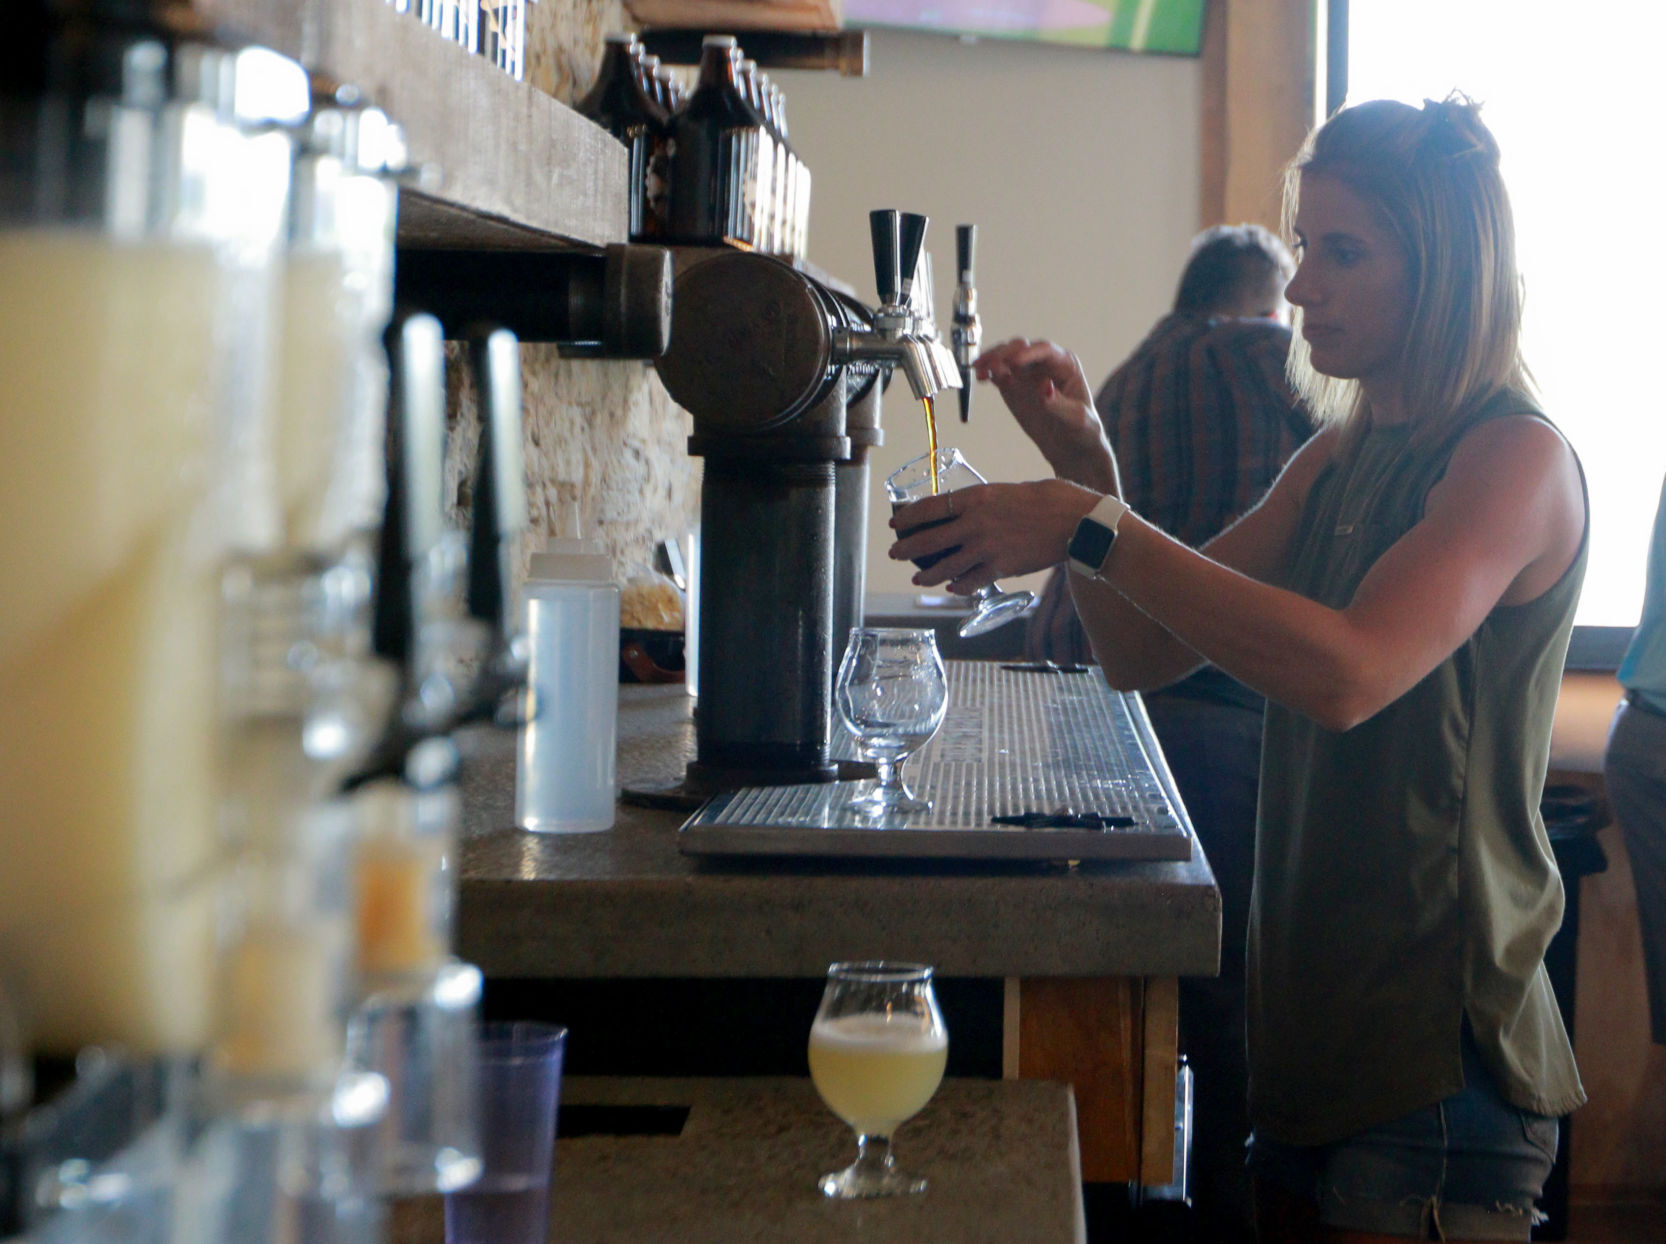 Bartender Abby Veach prepares a drink at River Ridge Brewing in Bellevue, Iowa, on Saturday, June 5, 2021. PHOTO CREDIT: Katie Goodale